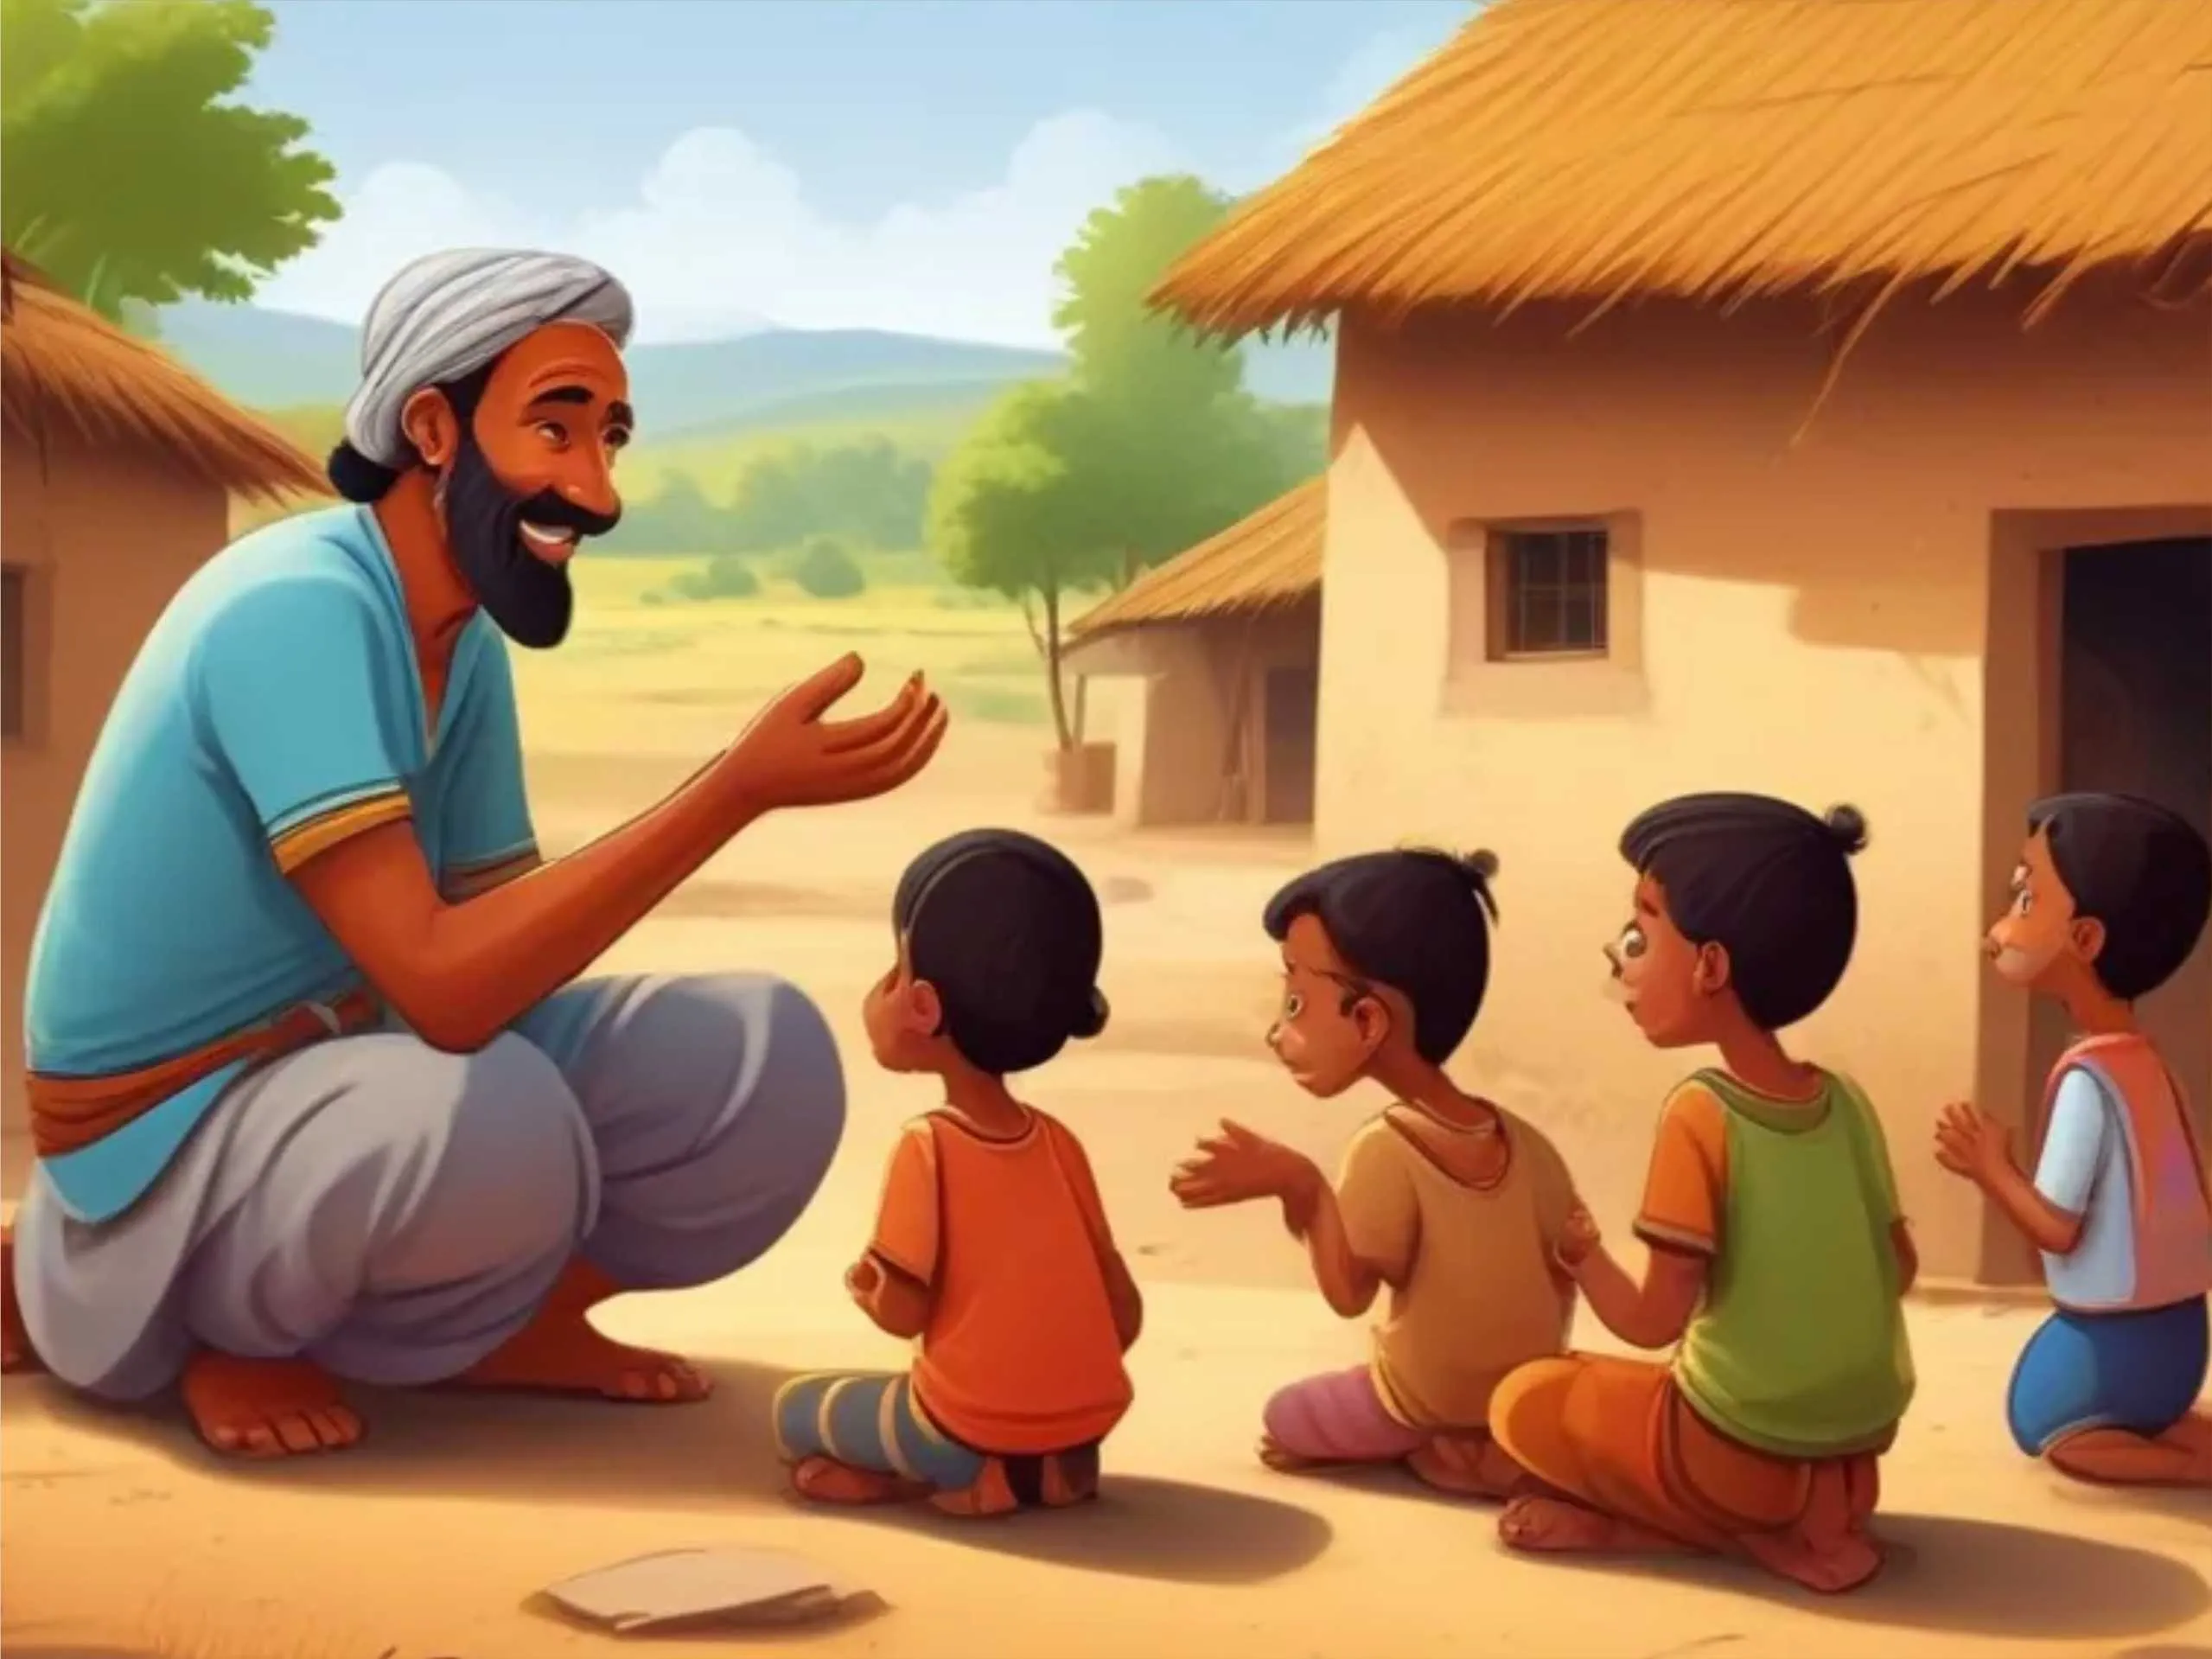 Farmer telling story to kids cartoon image